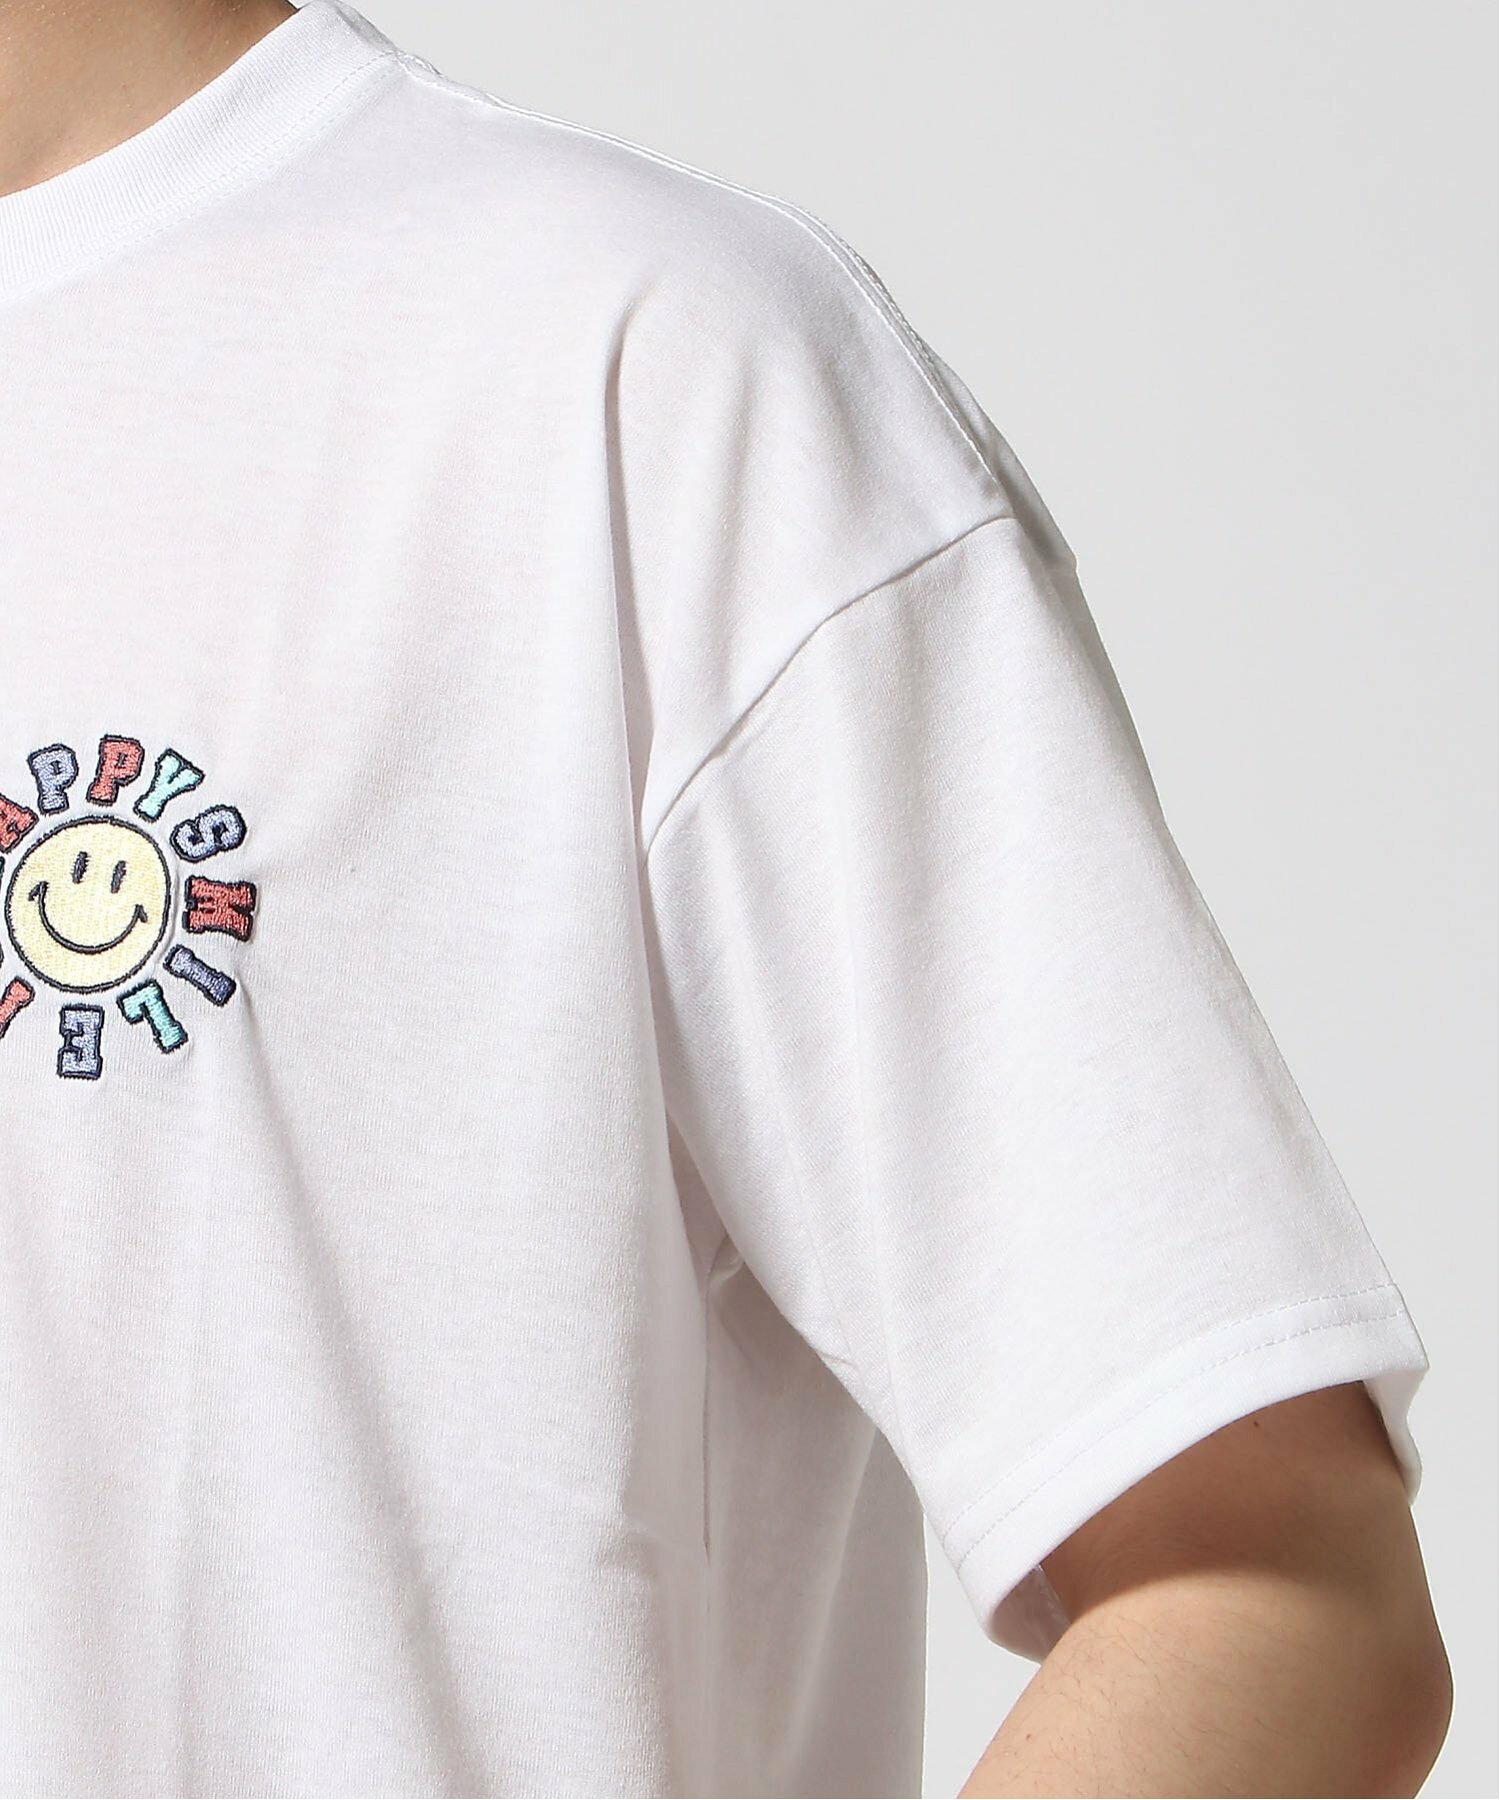 SMILEY FACE/(M)Tシャツ メンズ 半袖 スマイル ロゴ